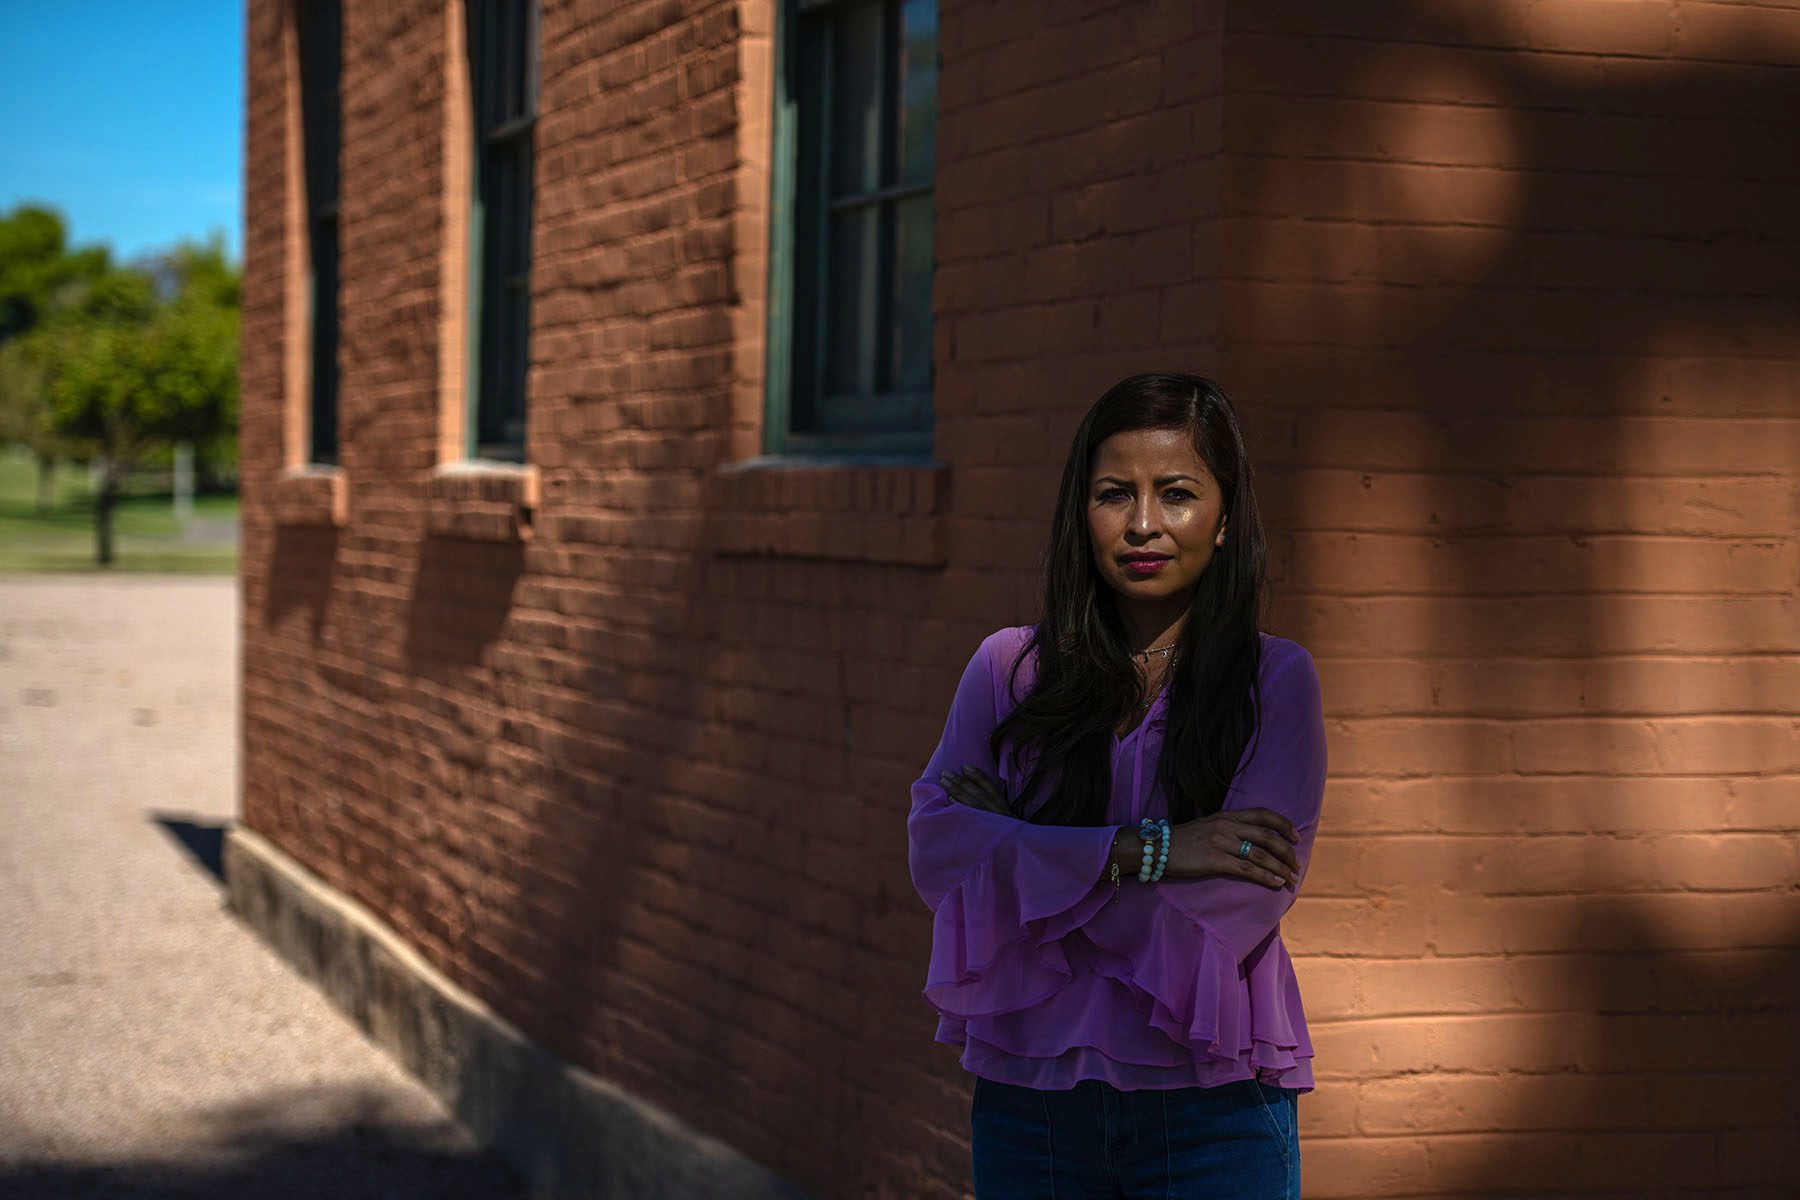 Ylenia Aguilar poses for a portrait near a brick building.